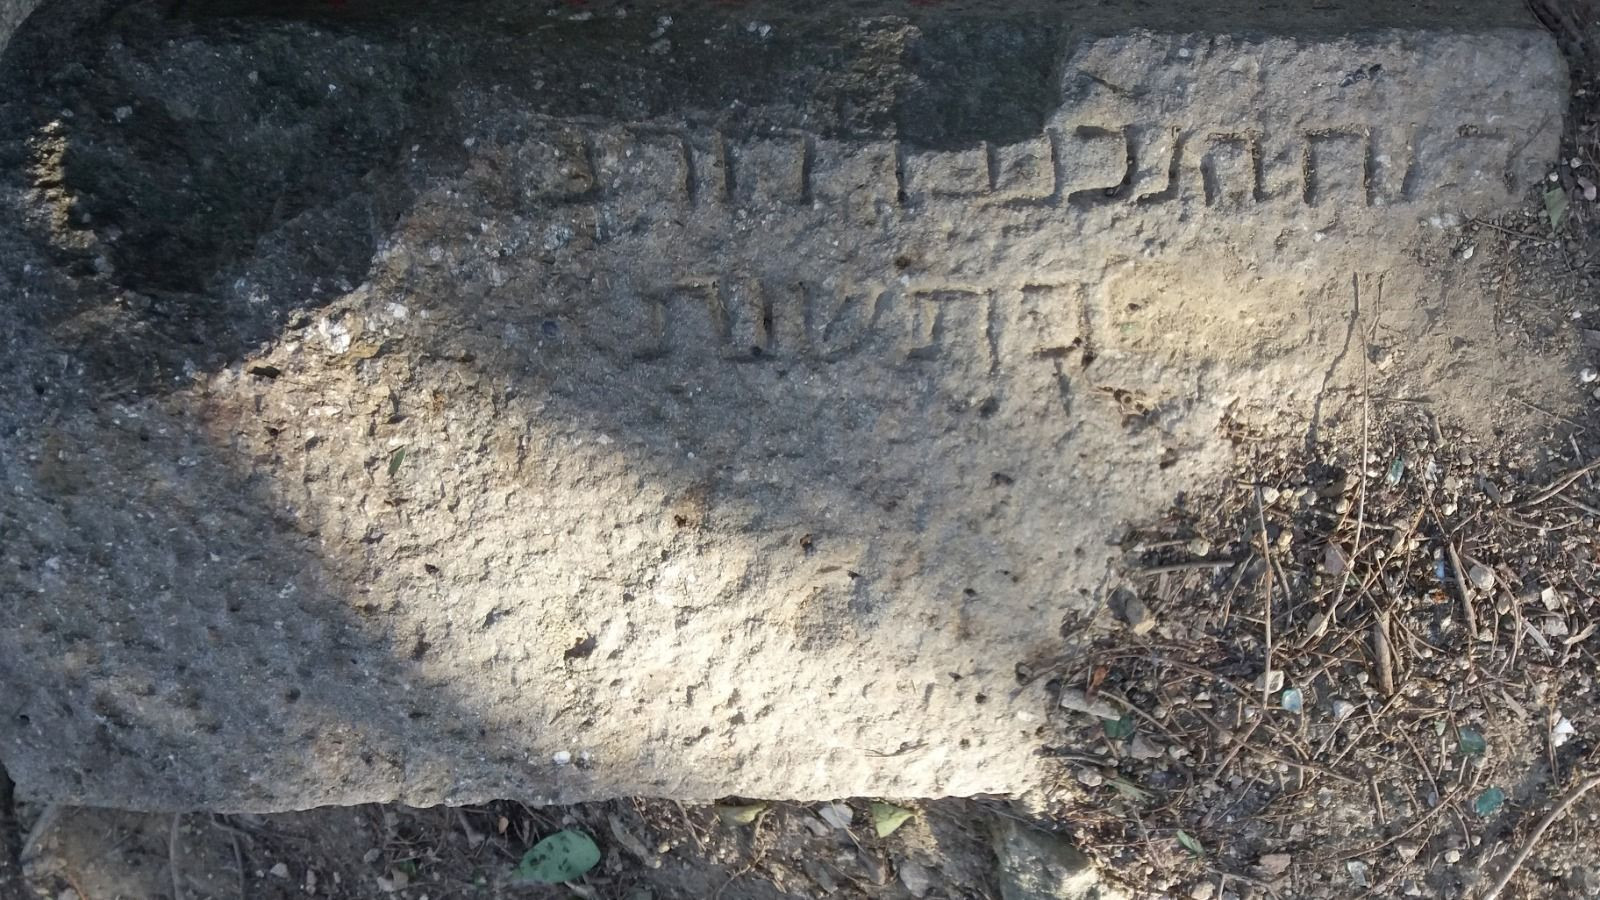 La lápida judía hallada por Eliseo López y Antonio Moreno en la montaña de Montjuïc / METRÓPOLI ABIERTA